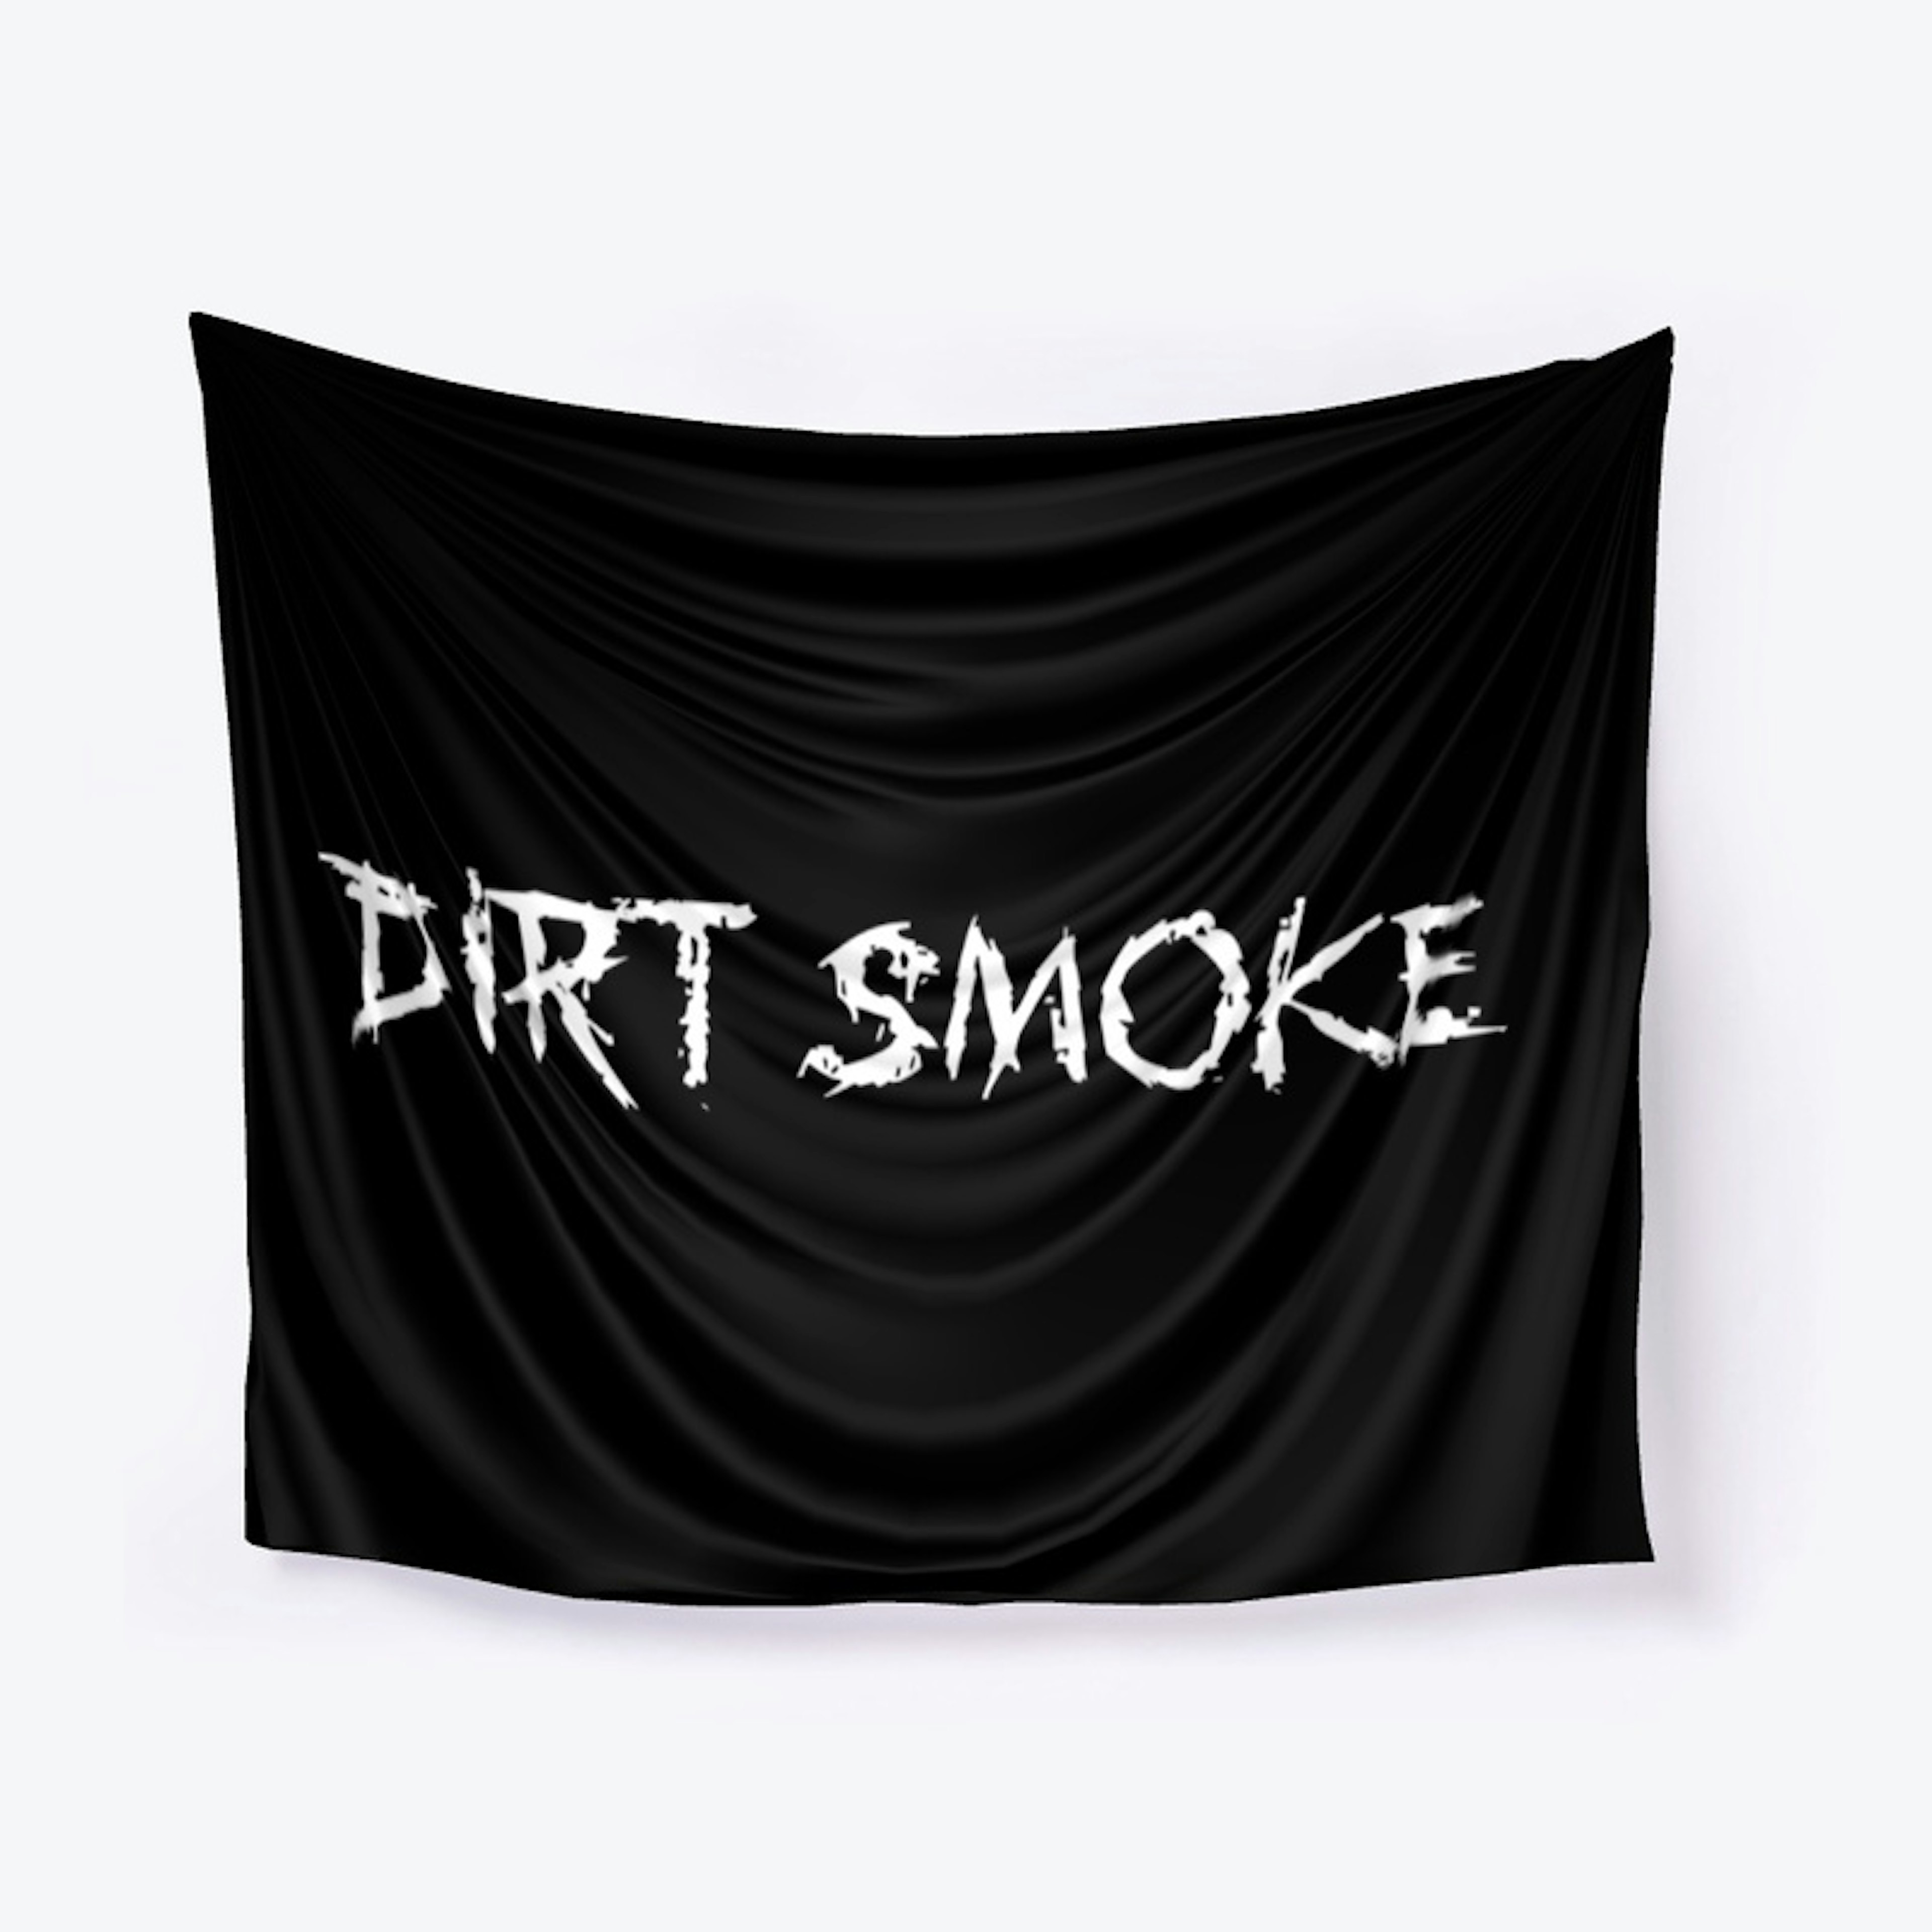 Dirt Smoke Tapestry